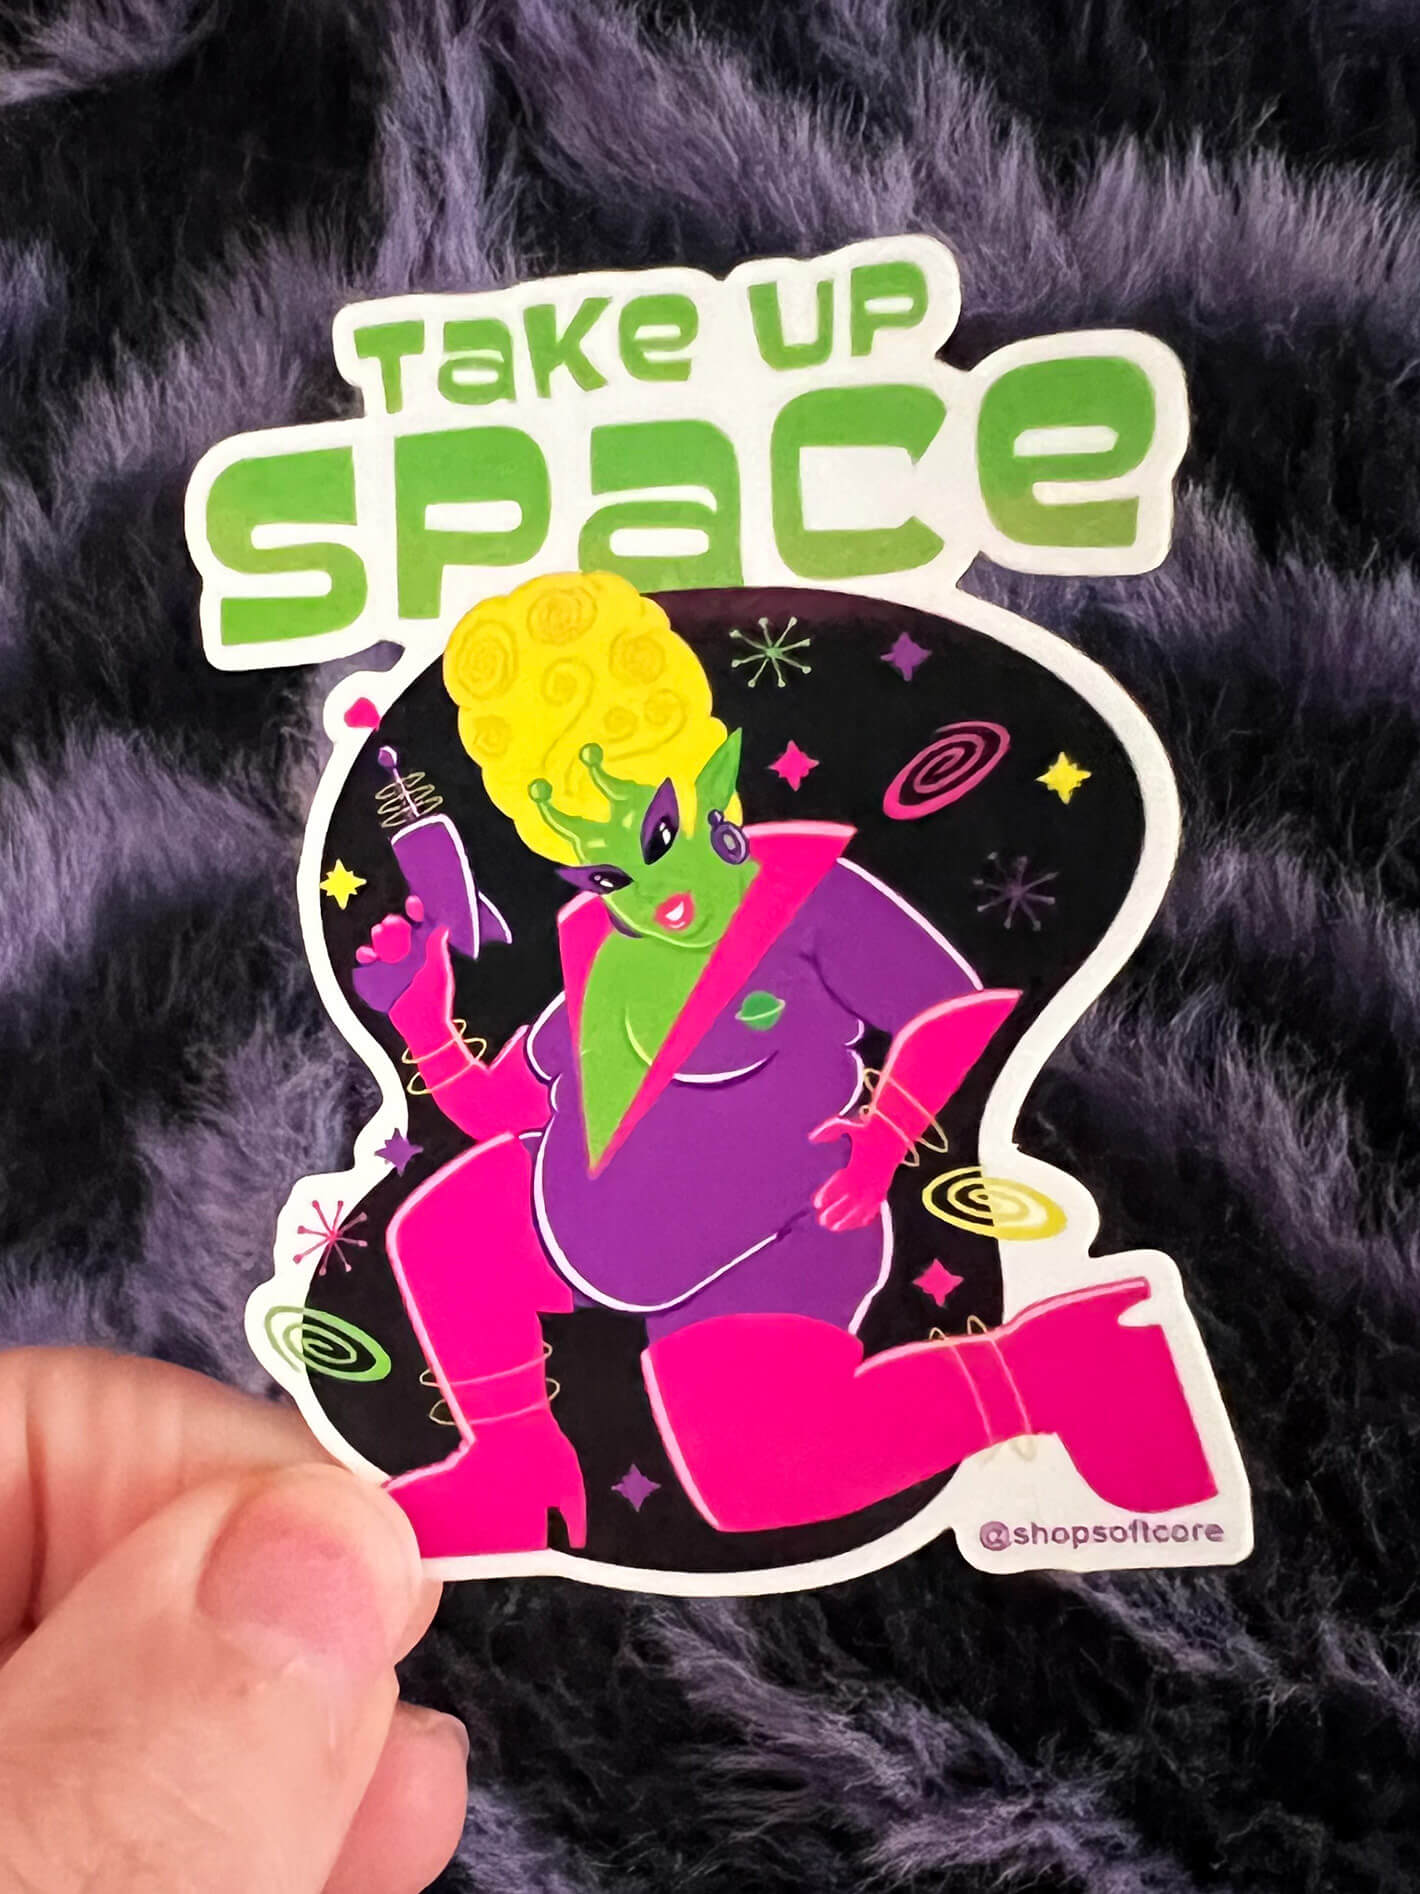 Take up space alien babe sticker.